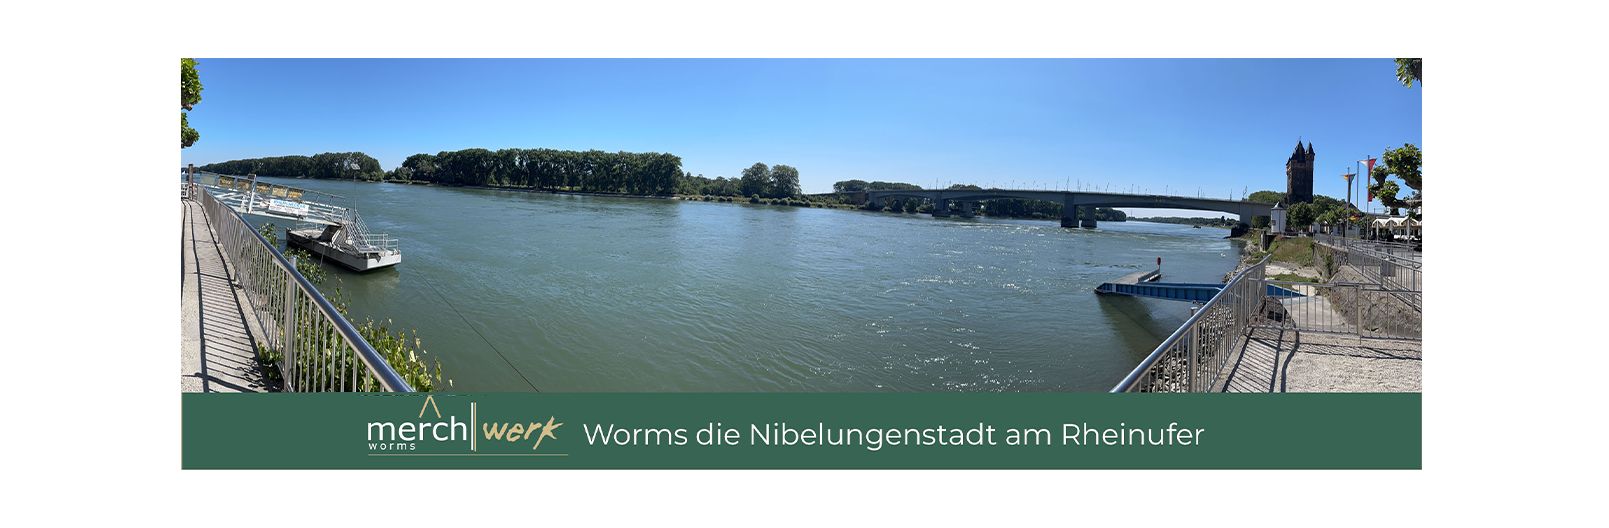 Worms die Nibelungenstadt am Rheinufer